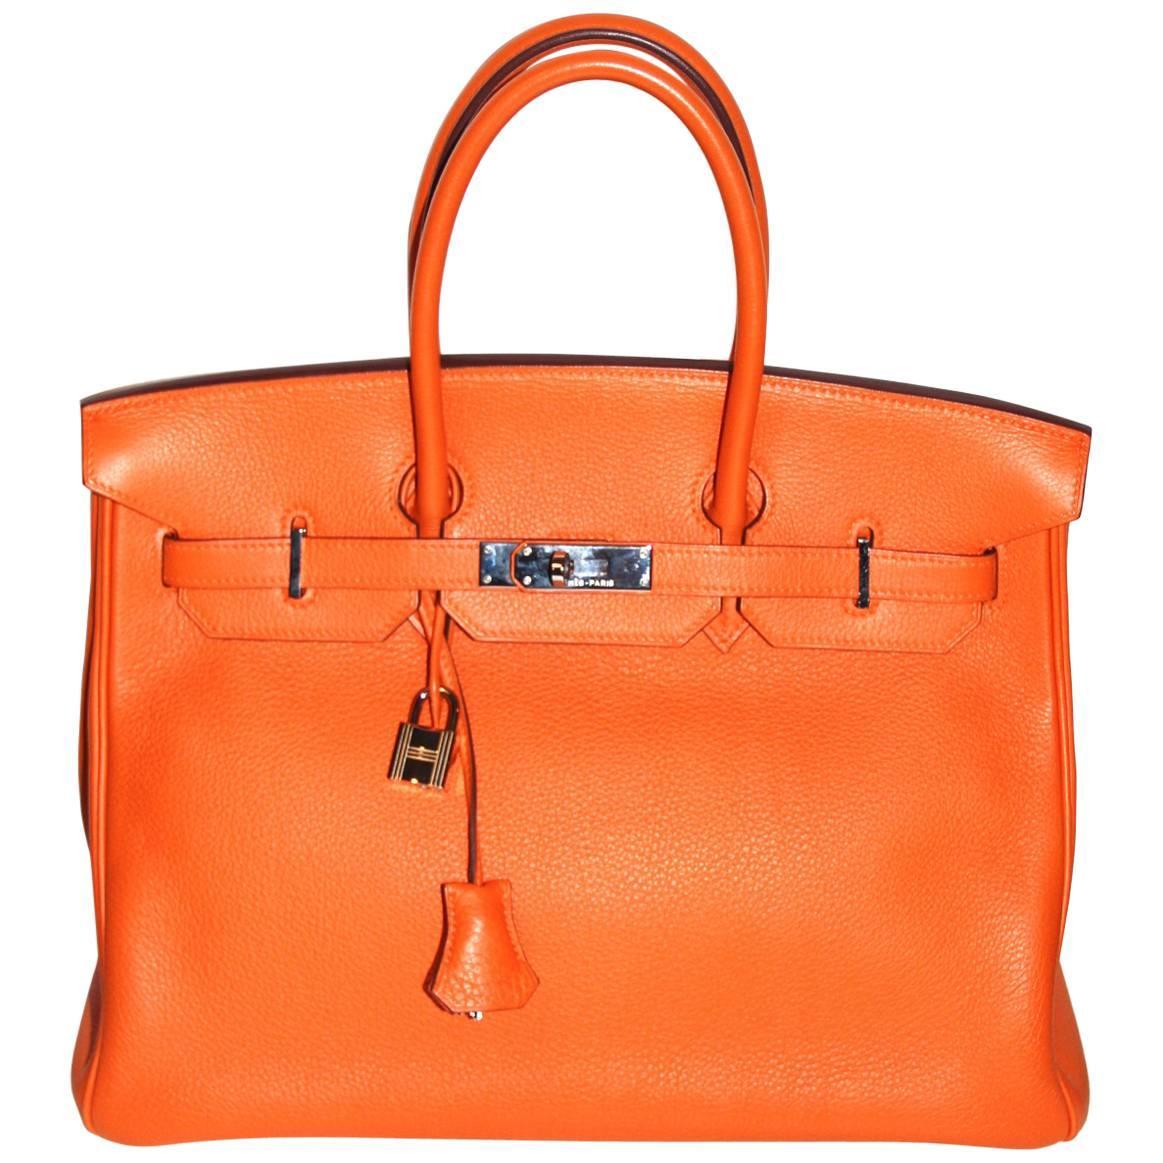 Hermes Birkin 35 Orange Togo Leather Palladium Hardware Like New For Sale at 1stdibs